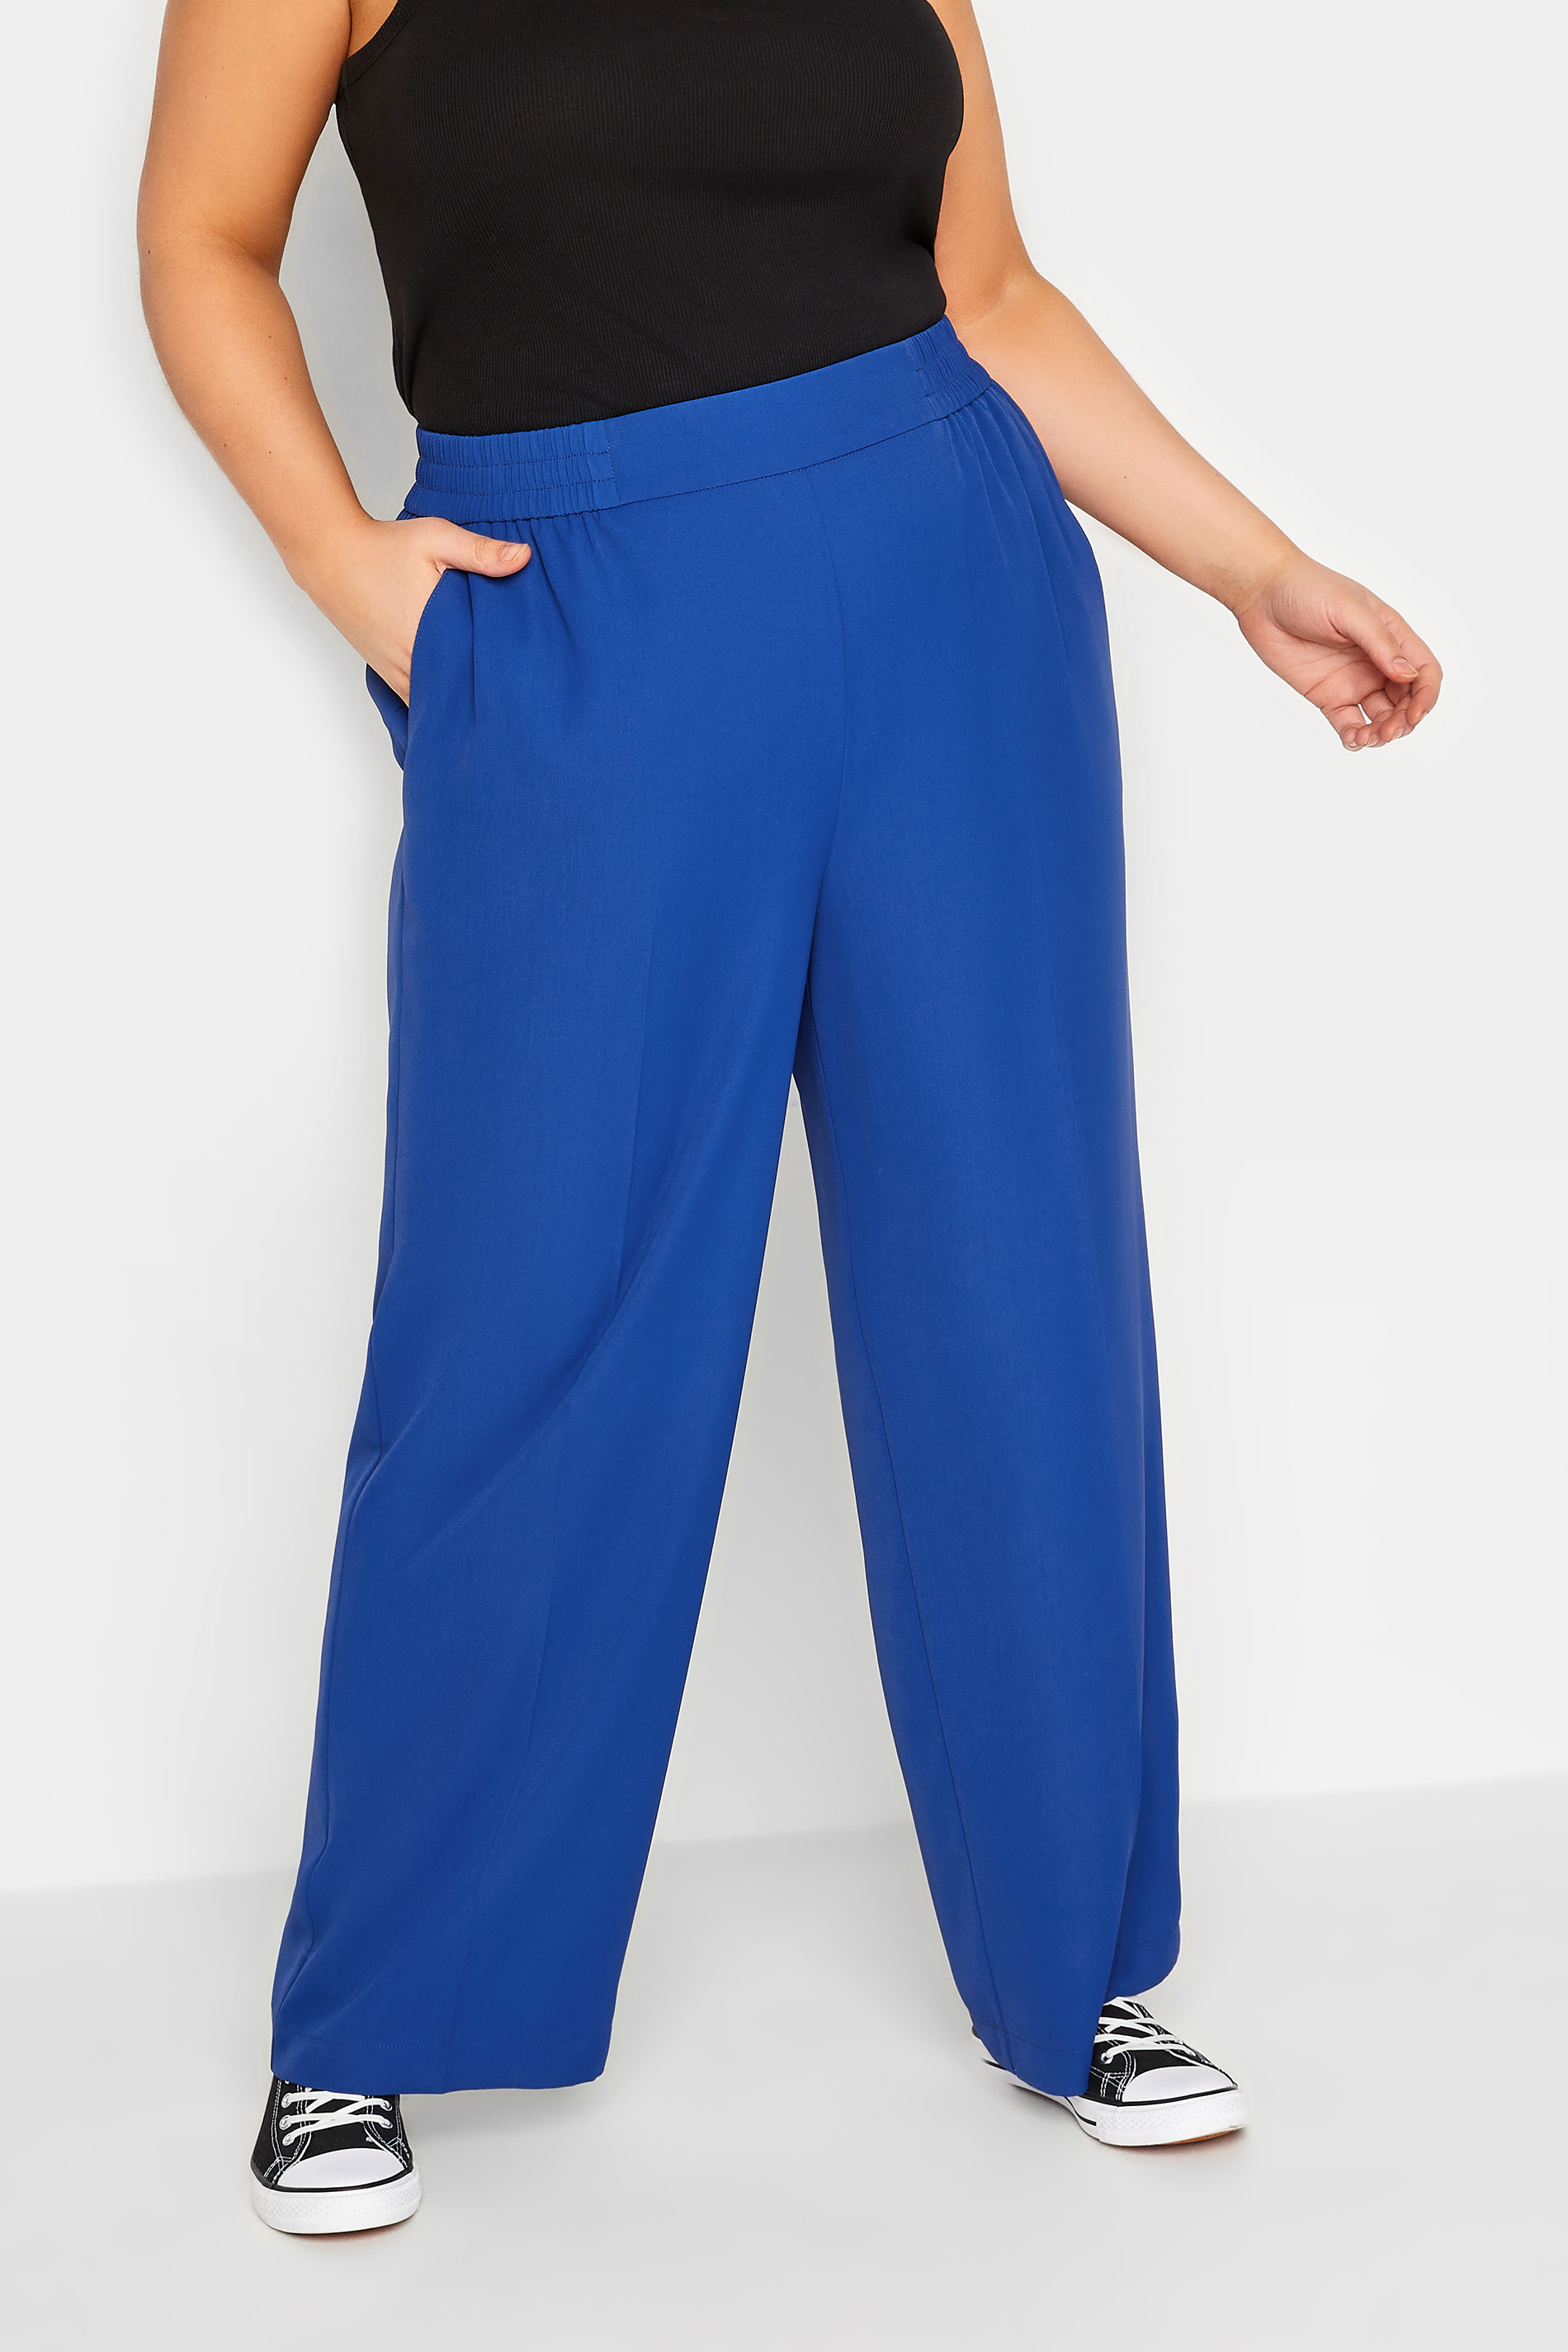 WOMEN'S LINEN PANTS Blue Palazzo Pants Linen Culottes - Etsy